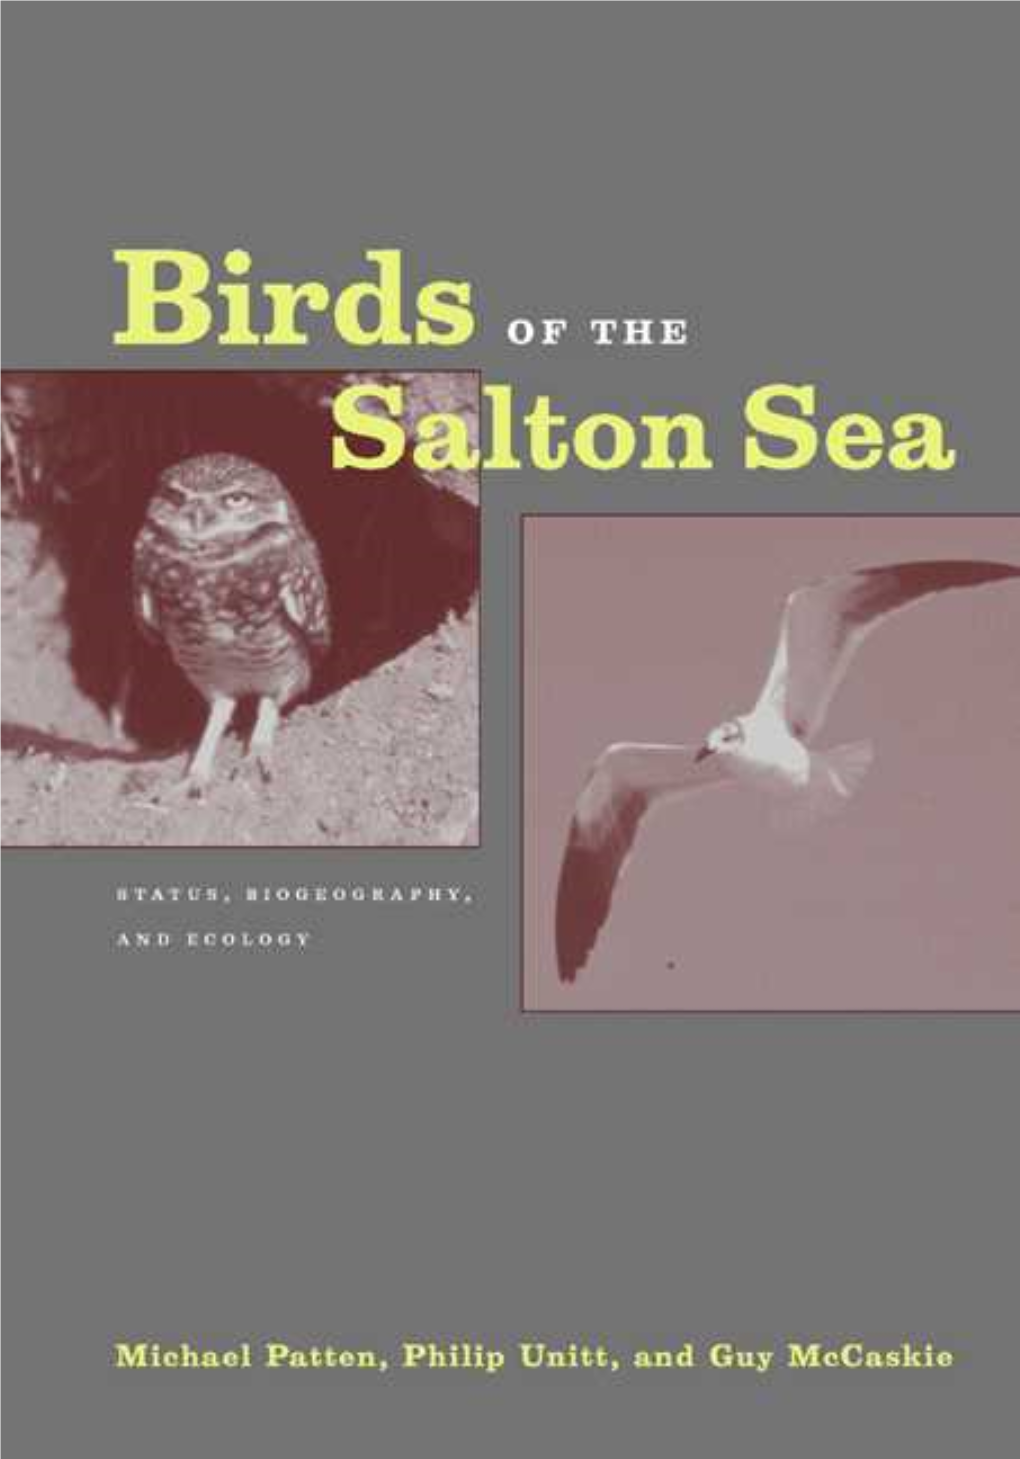 Birds of the Salton Sea by Michael Patten Philip